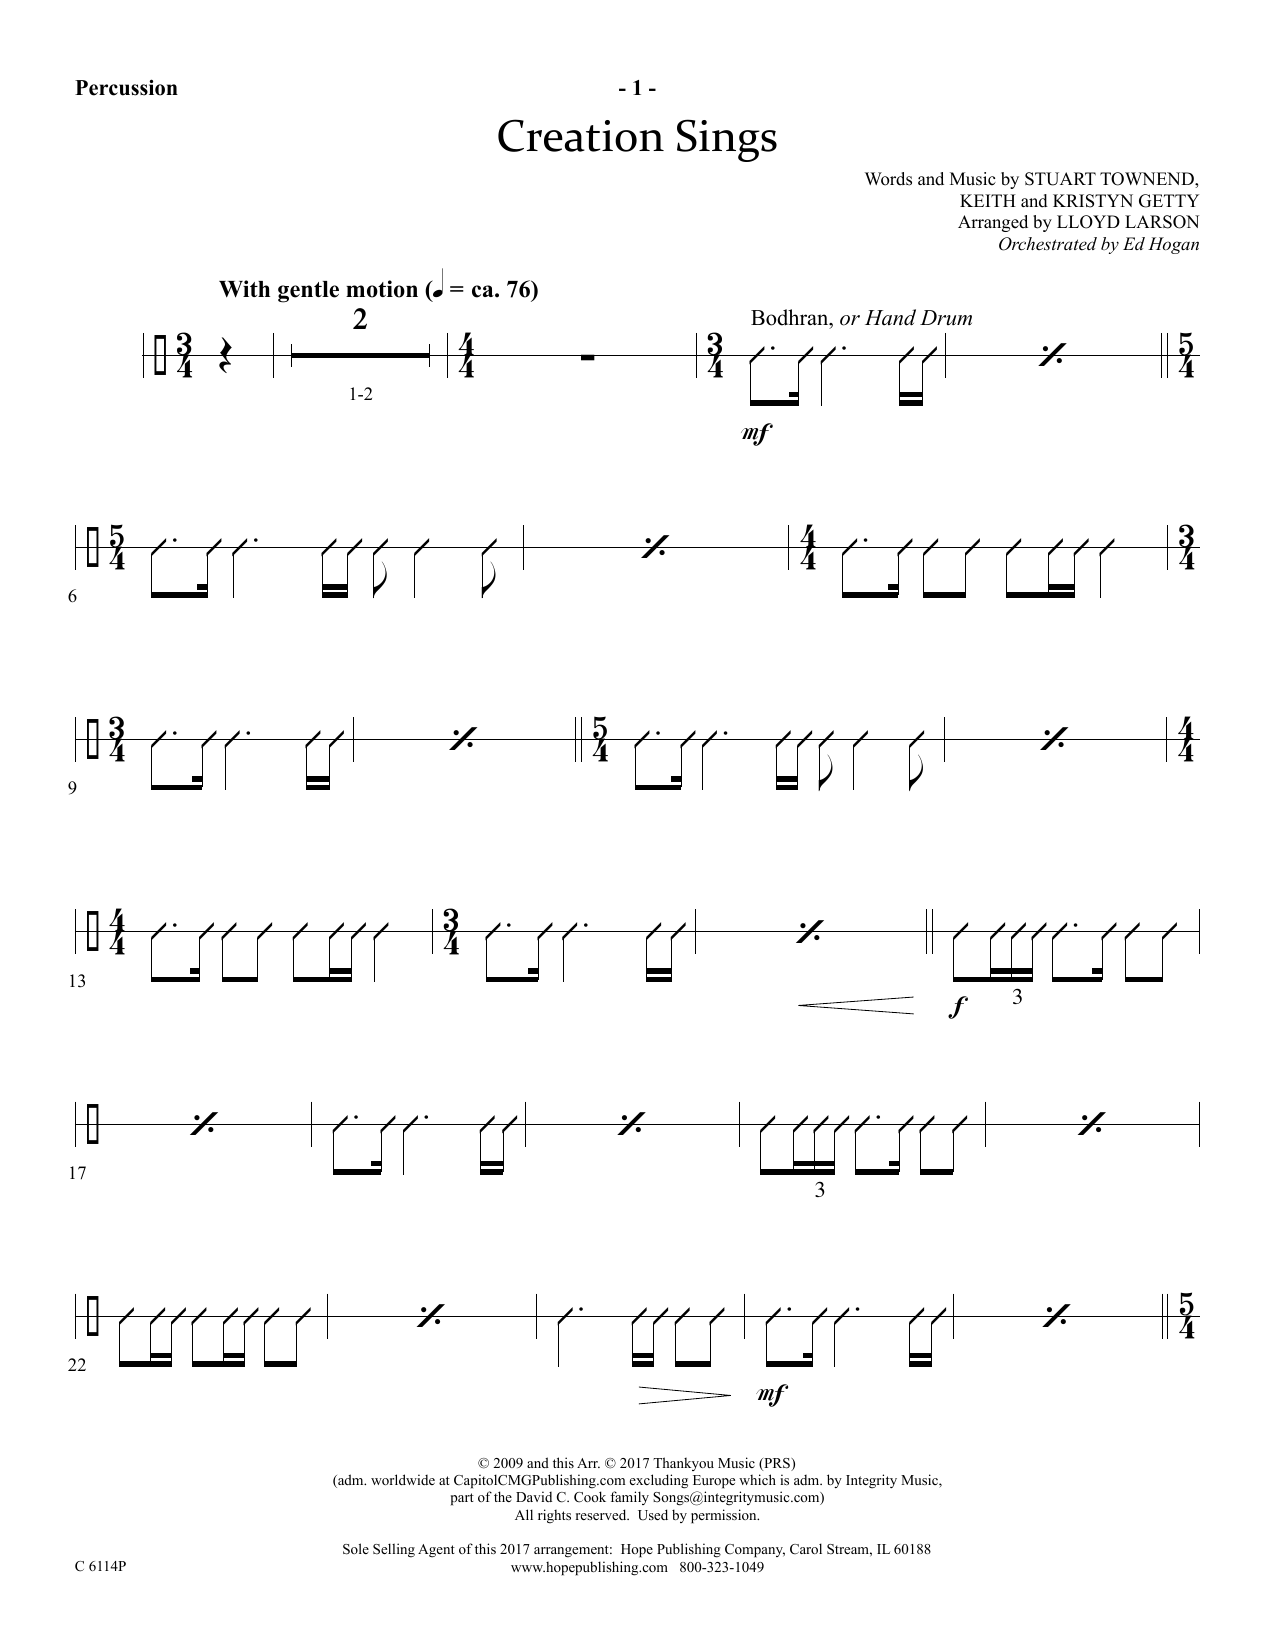 Lloyd Larson Creation Sings - Percussion Sheet Music Notes & Chords for Choir Instrumental Pak - Download or Print PDF